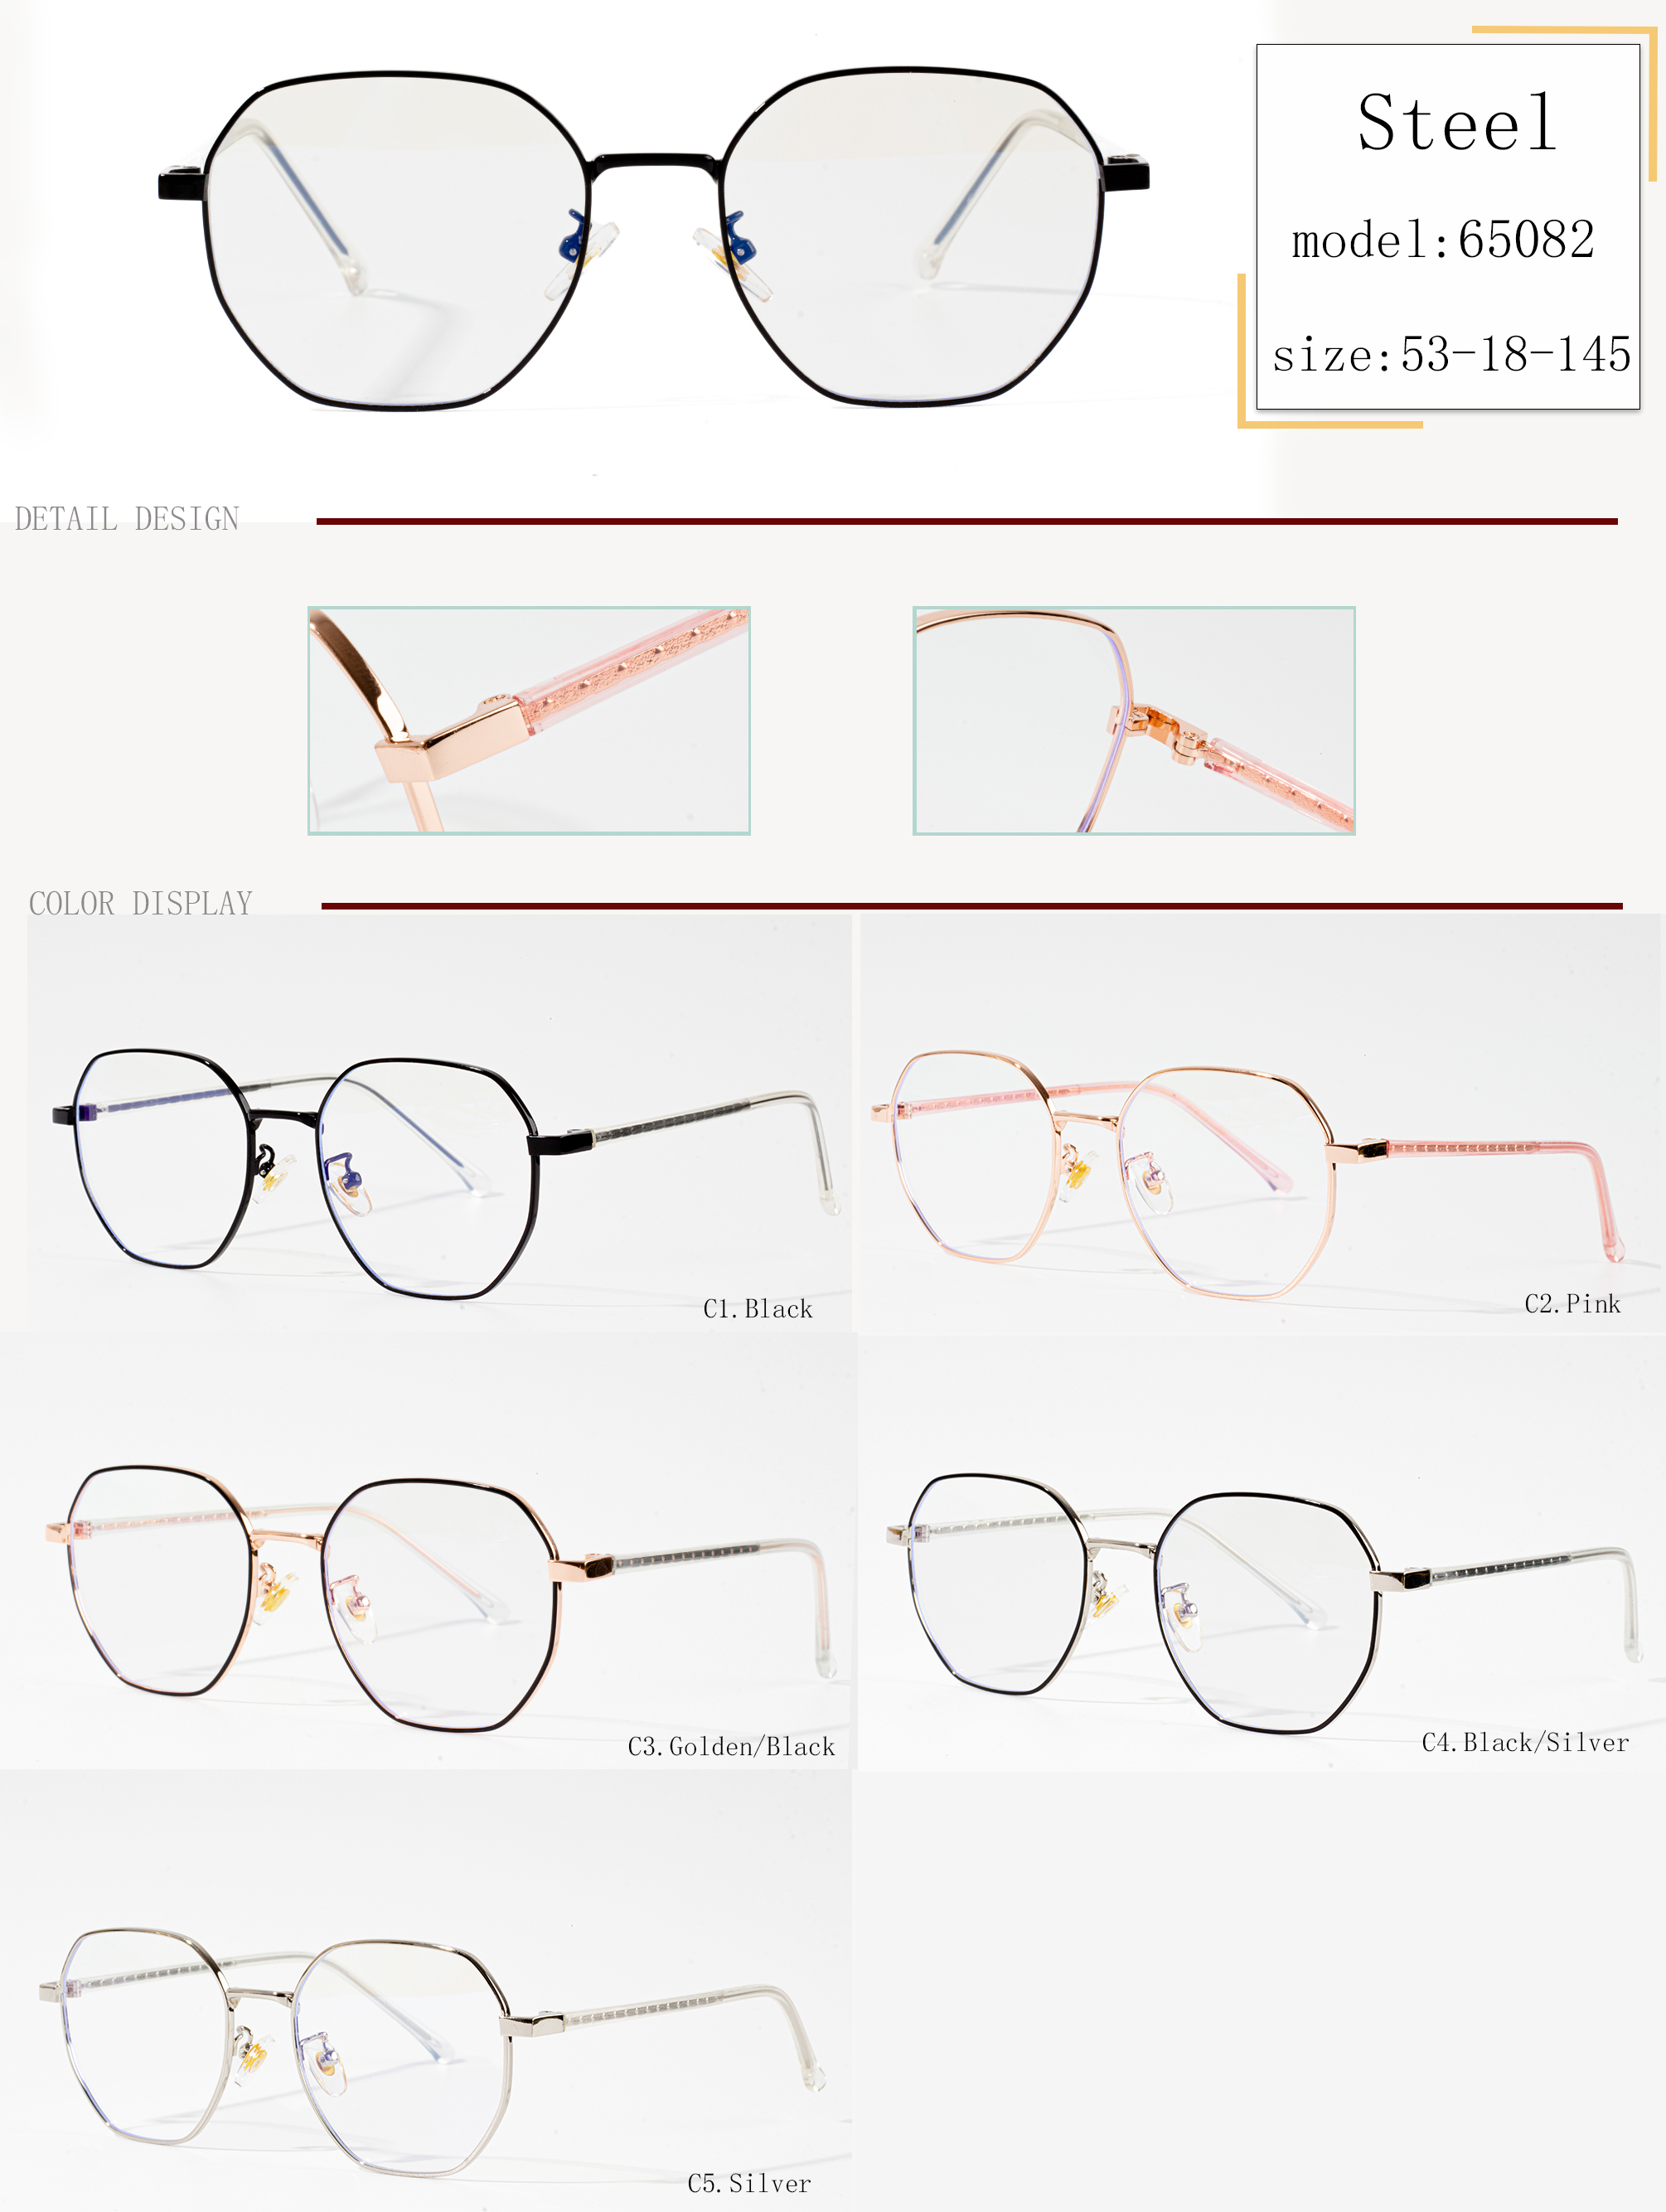 eyeglass frames expensive